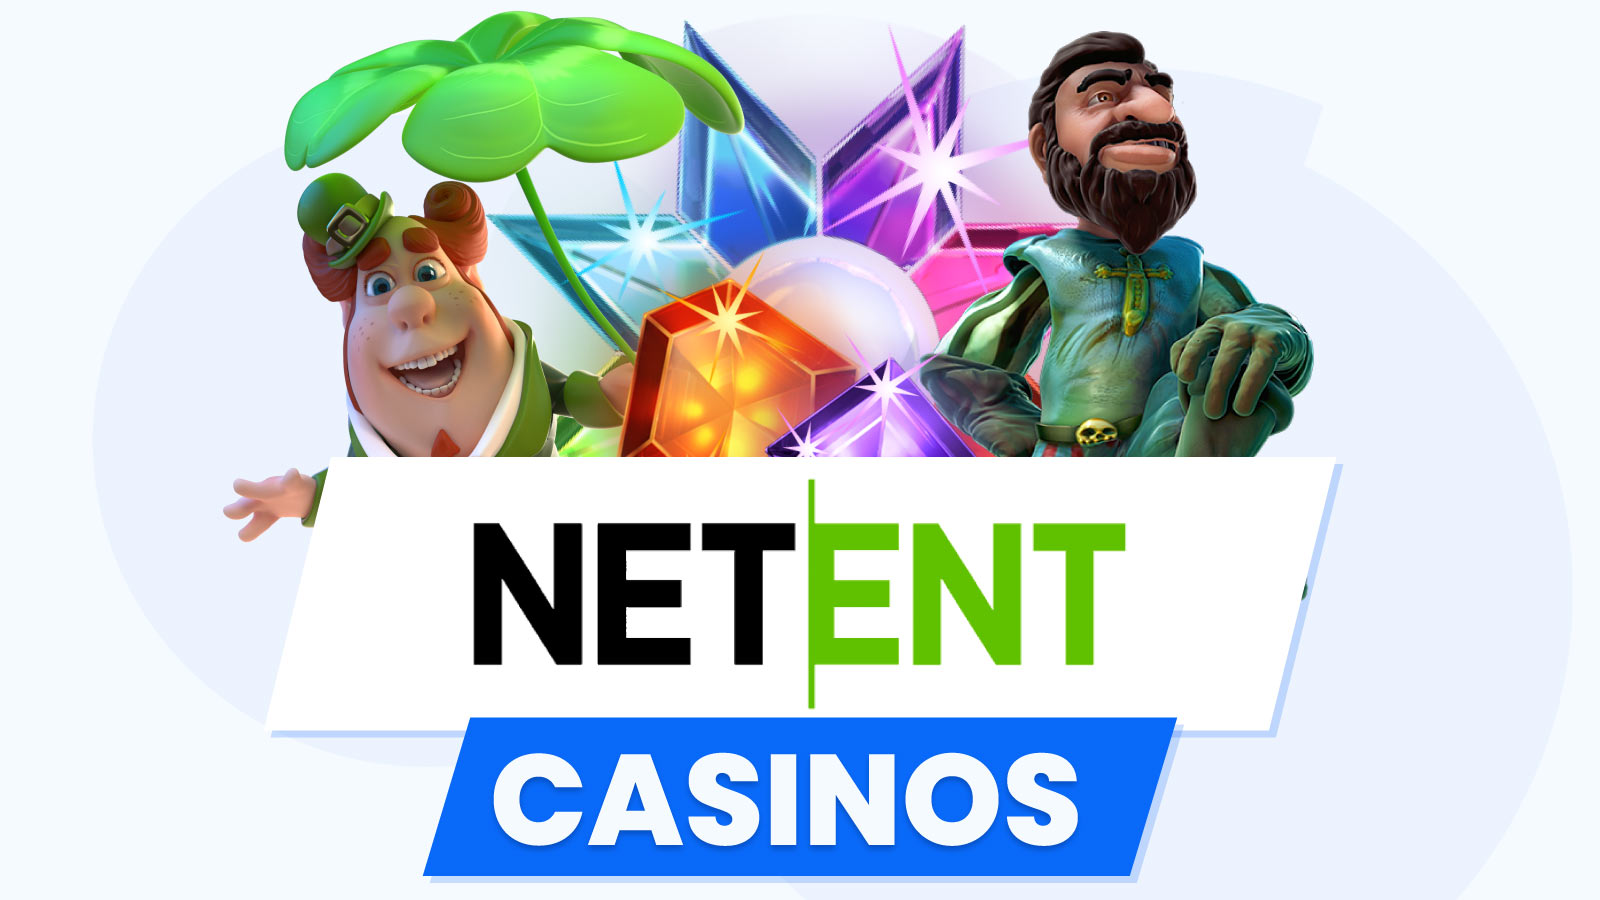 NetEnt Casinos And NetEnt No Deposit Bonuses